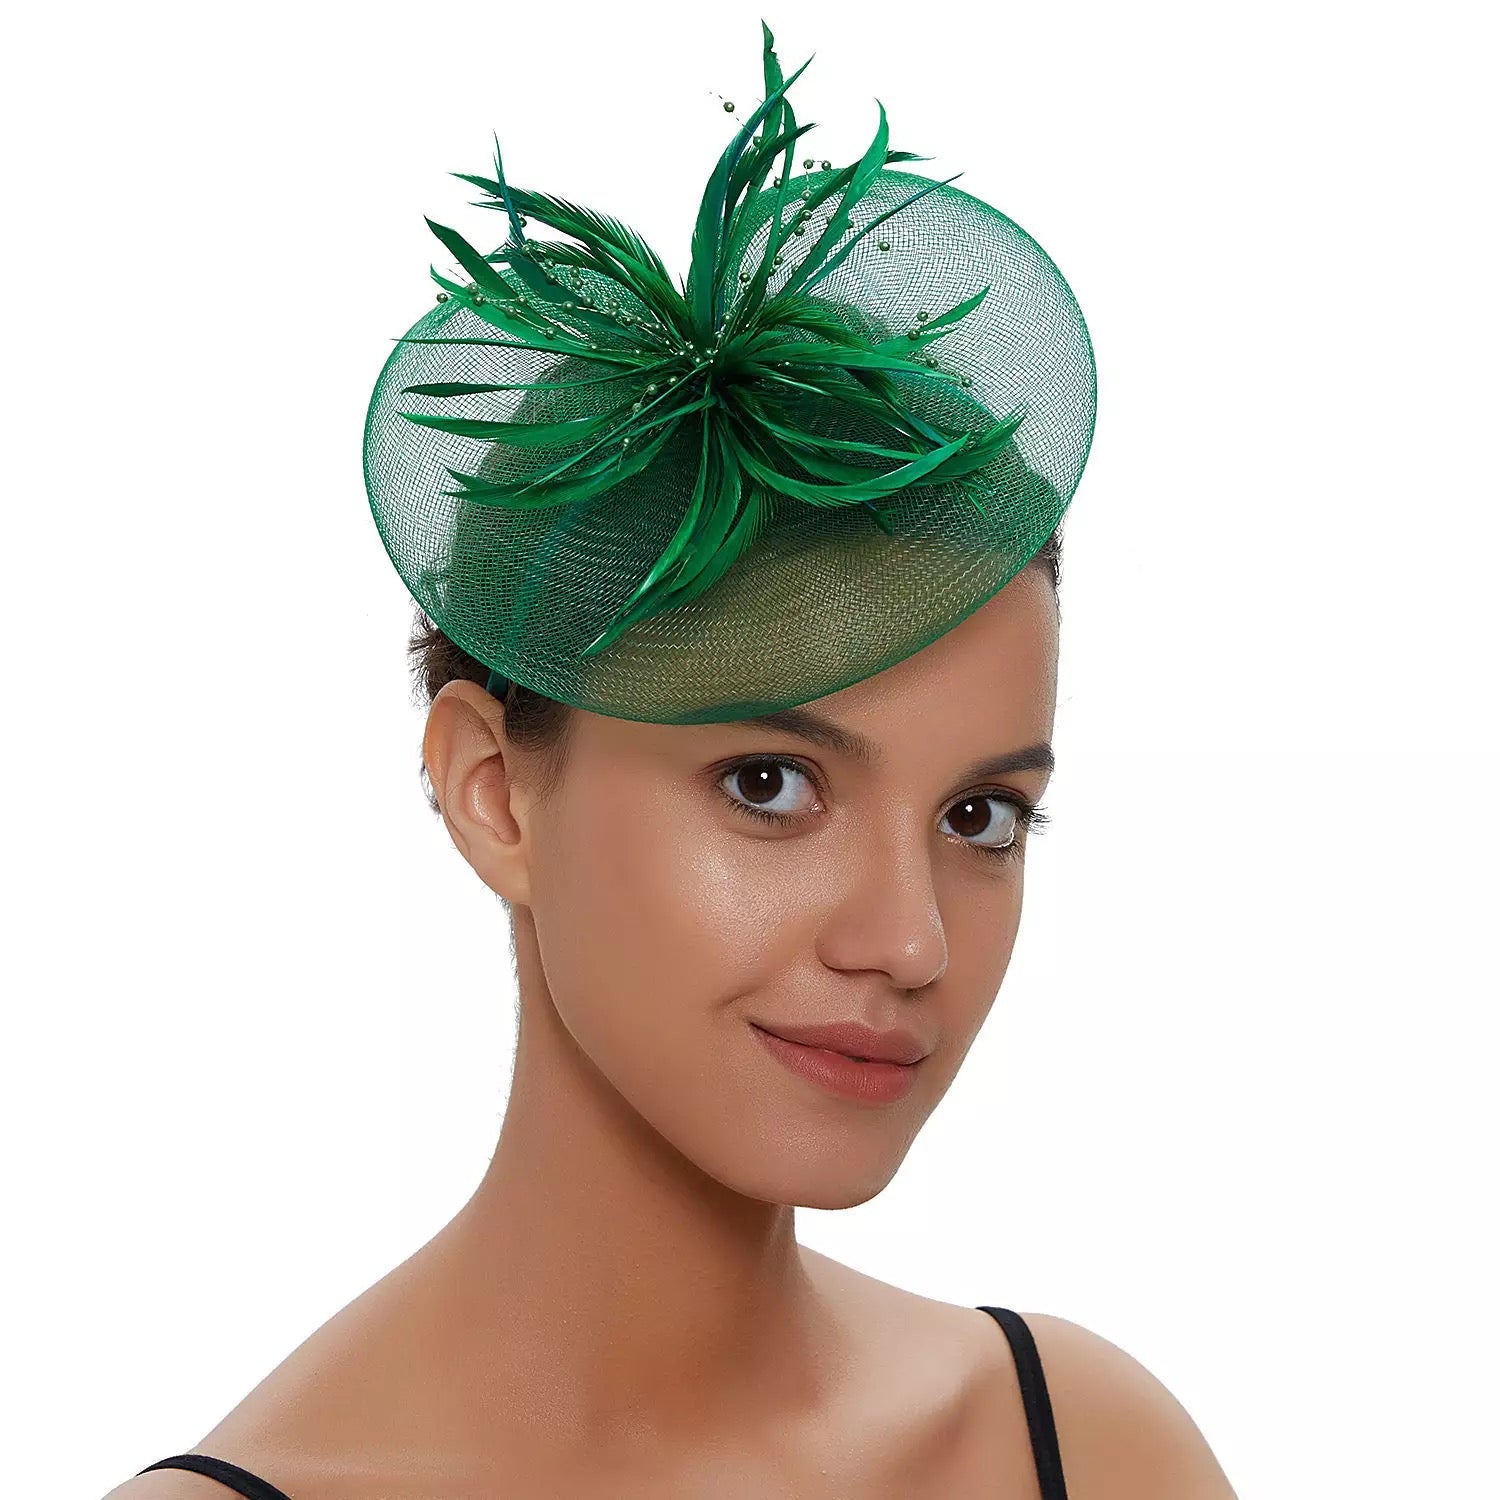 Crinoline and Feather Headband Fascinator - Emerald Green